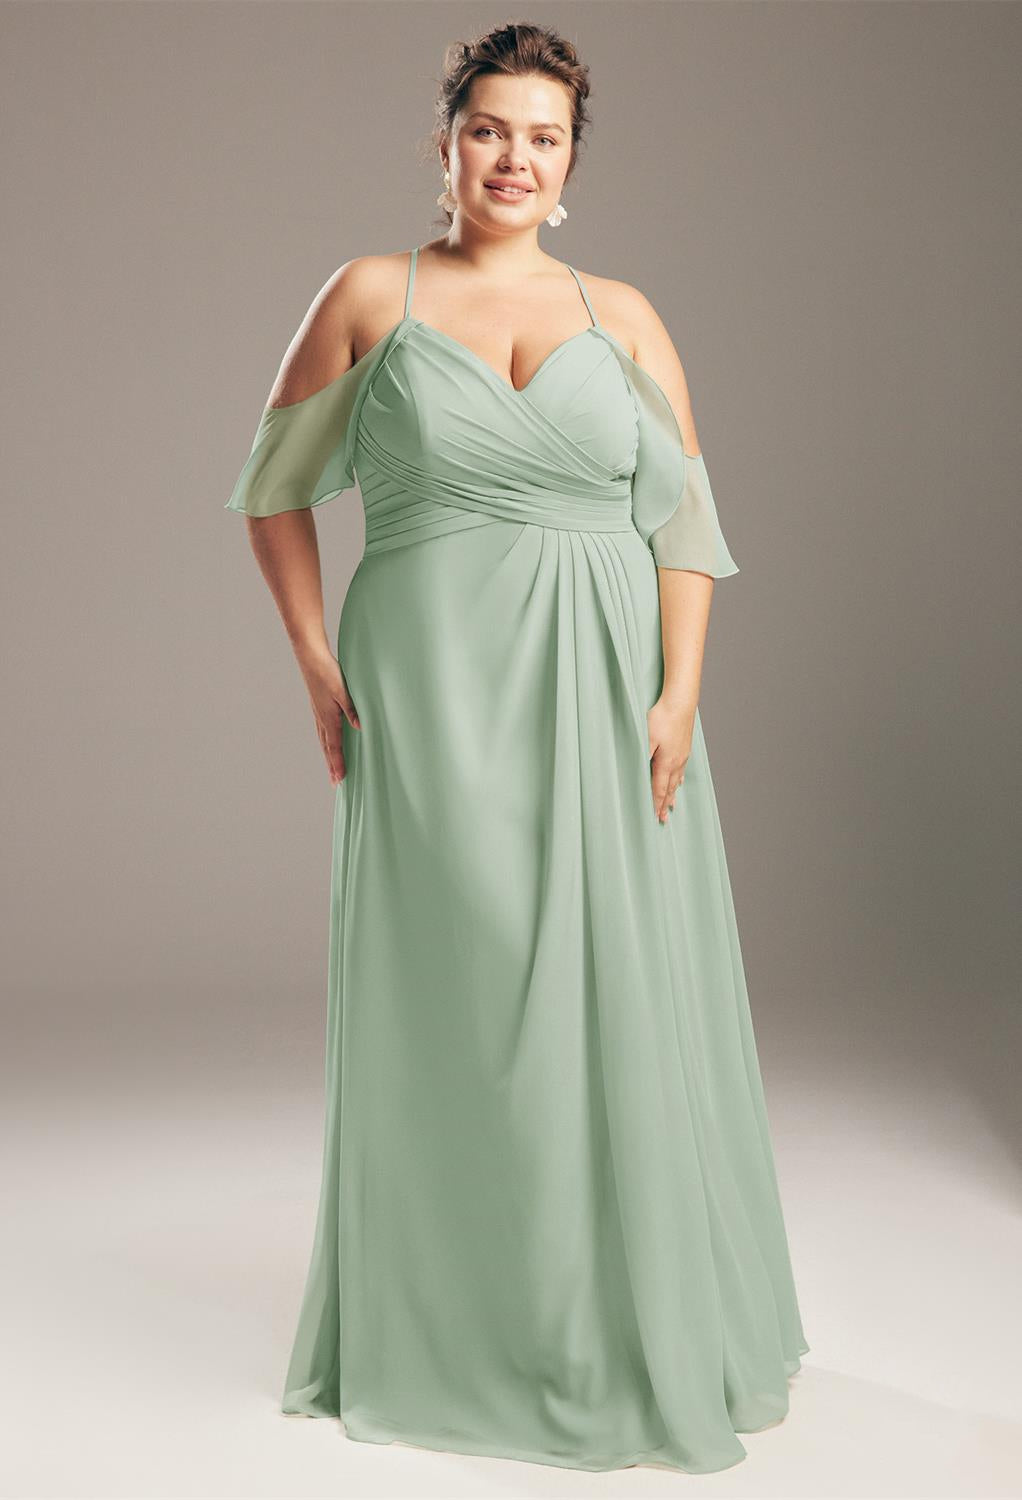 A plus size bridesmaid in a sage green "Jenifer - Chiffon Bridesmaid Dress - Off the Rack" from Bergamot Bridal.